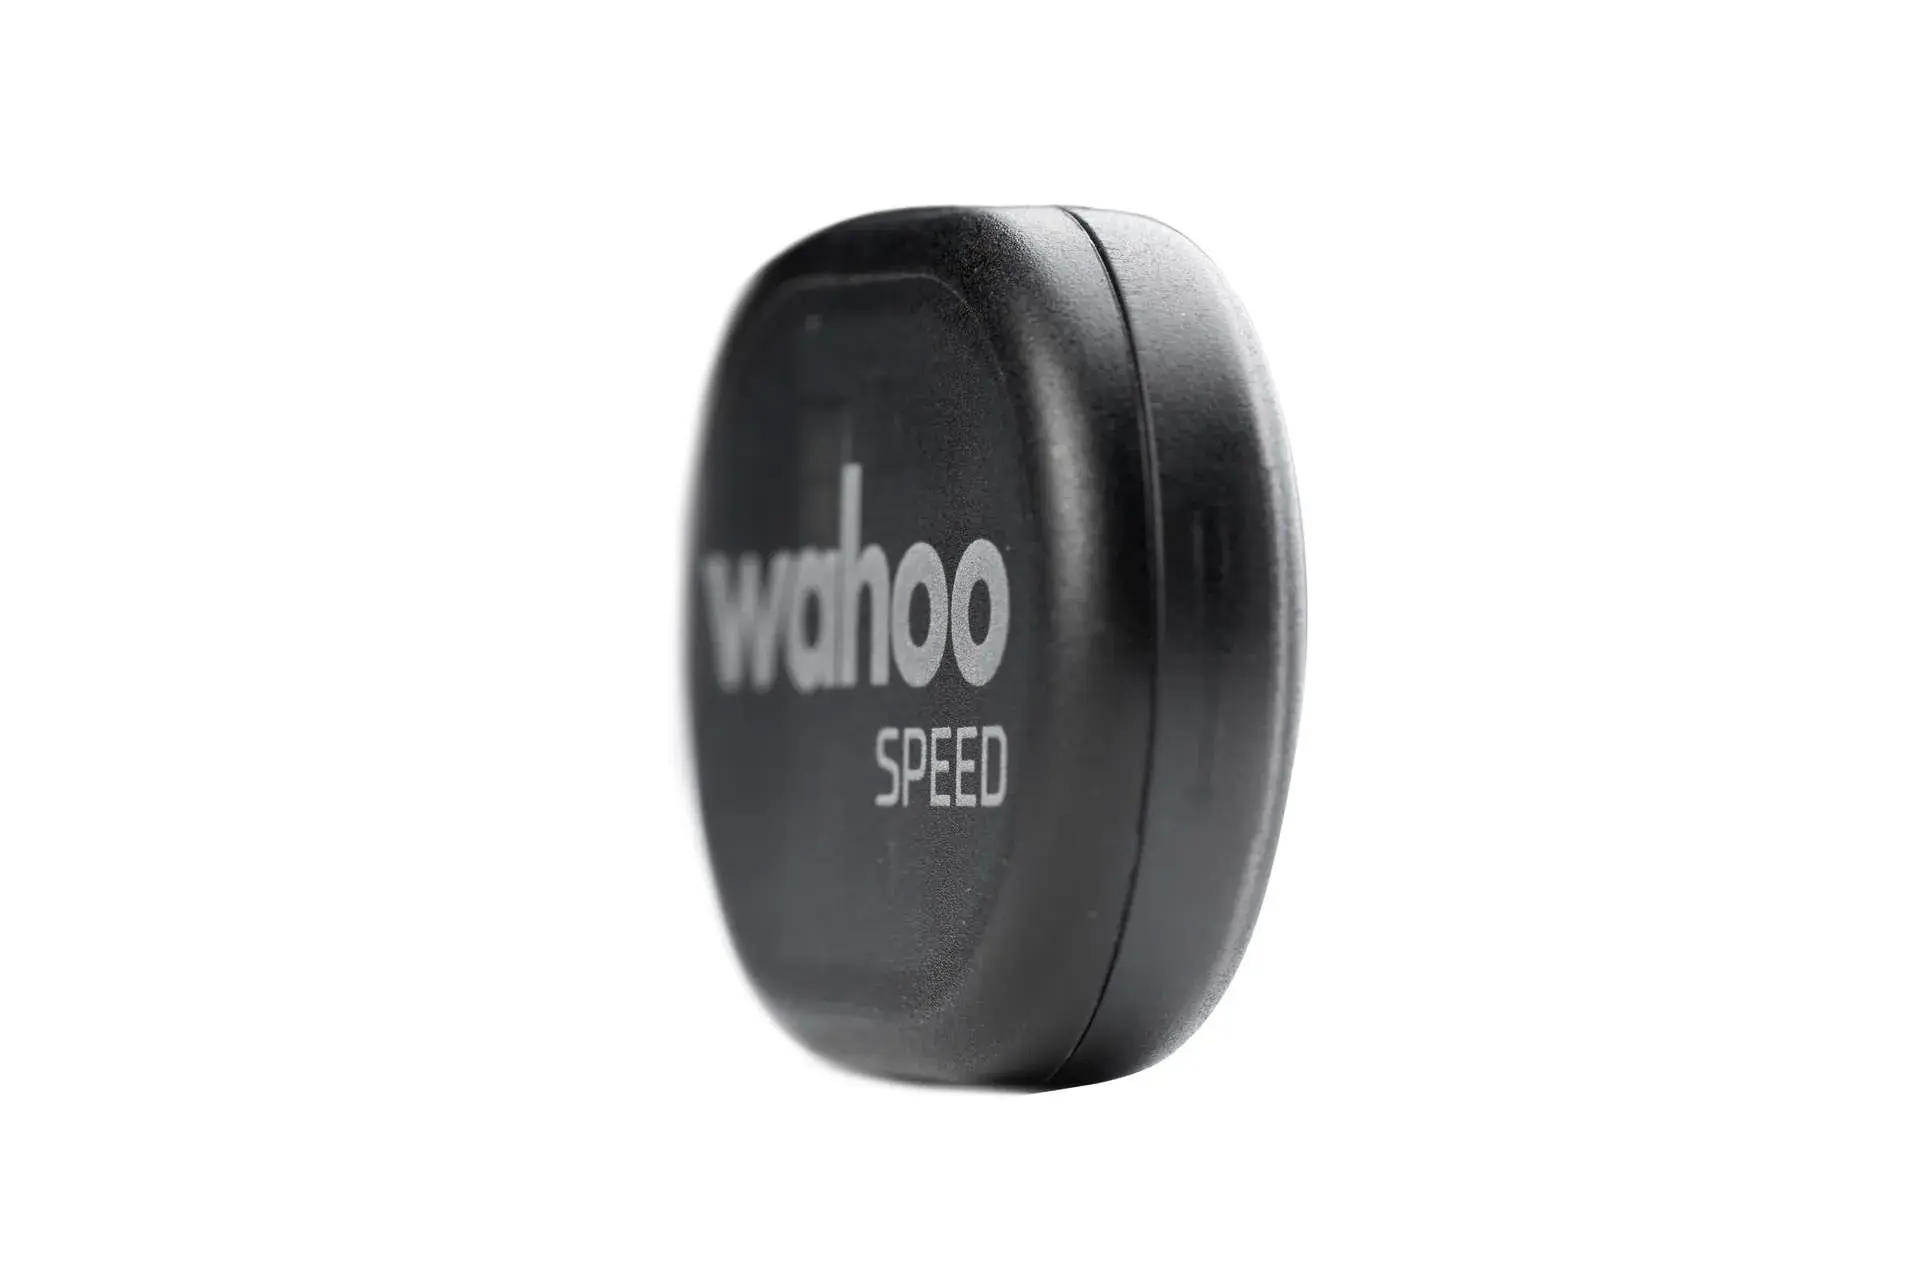 Wahoo RPM Snelheidssensor ANT+ Bluetooth